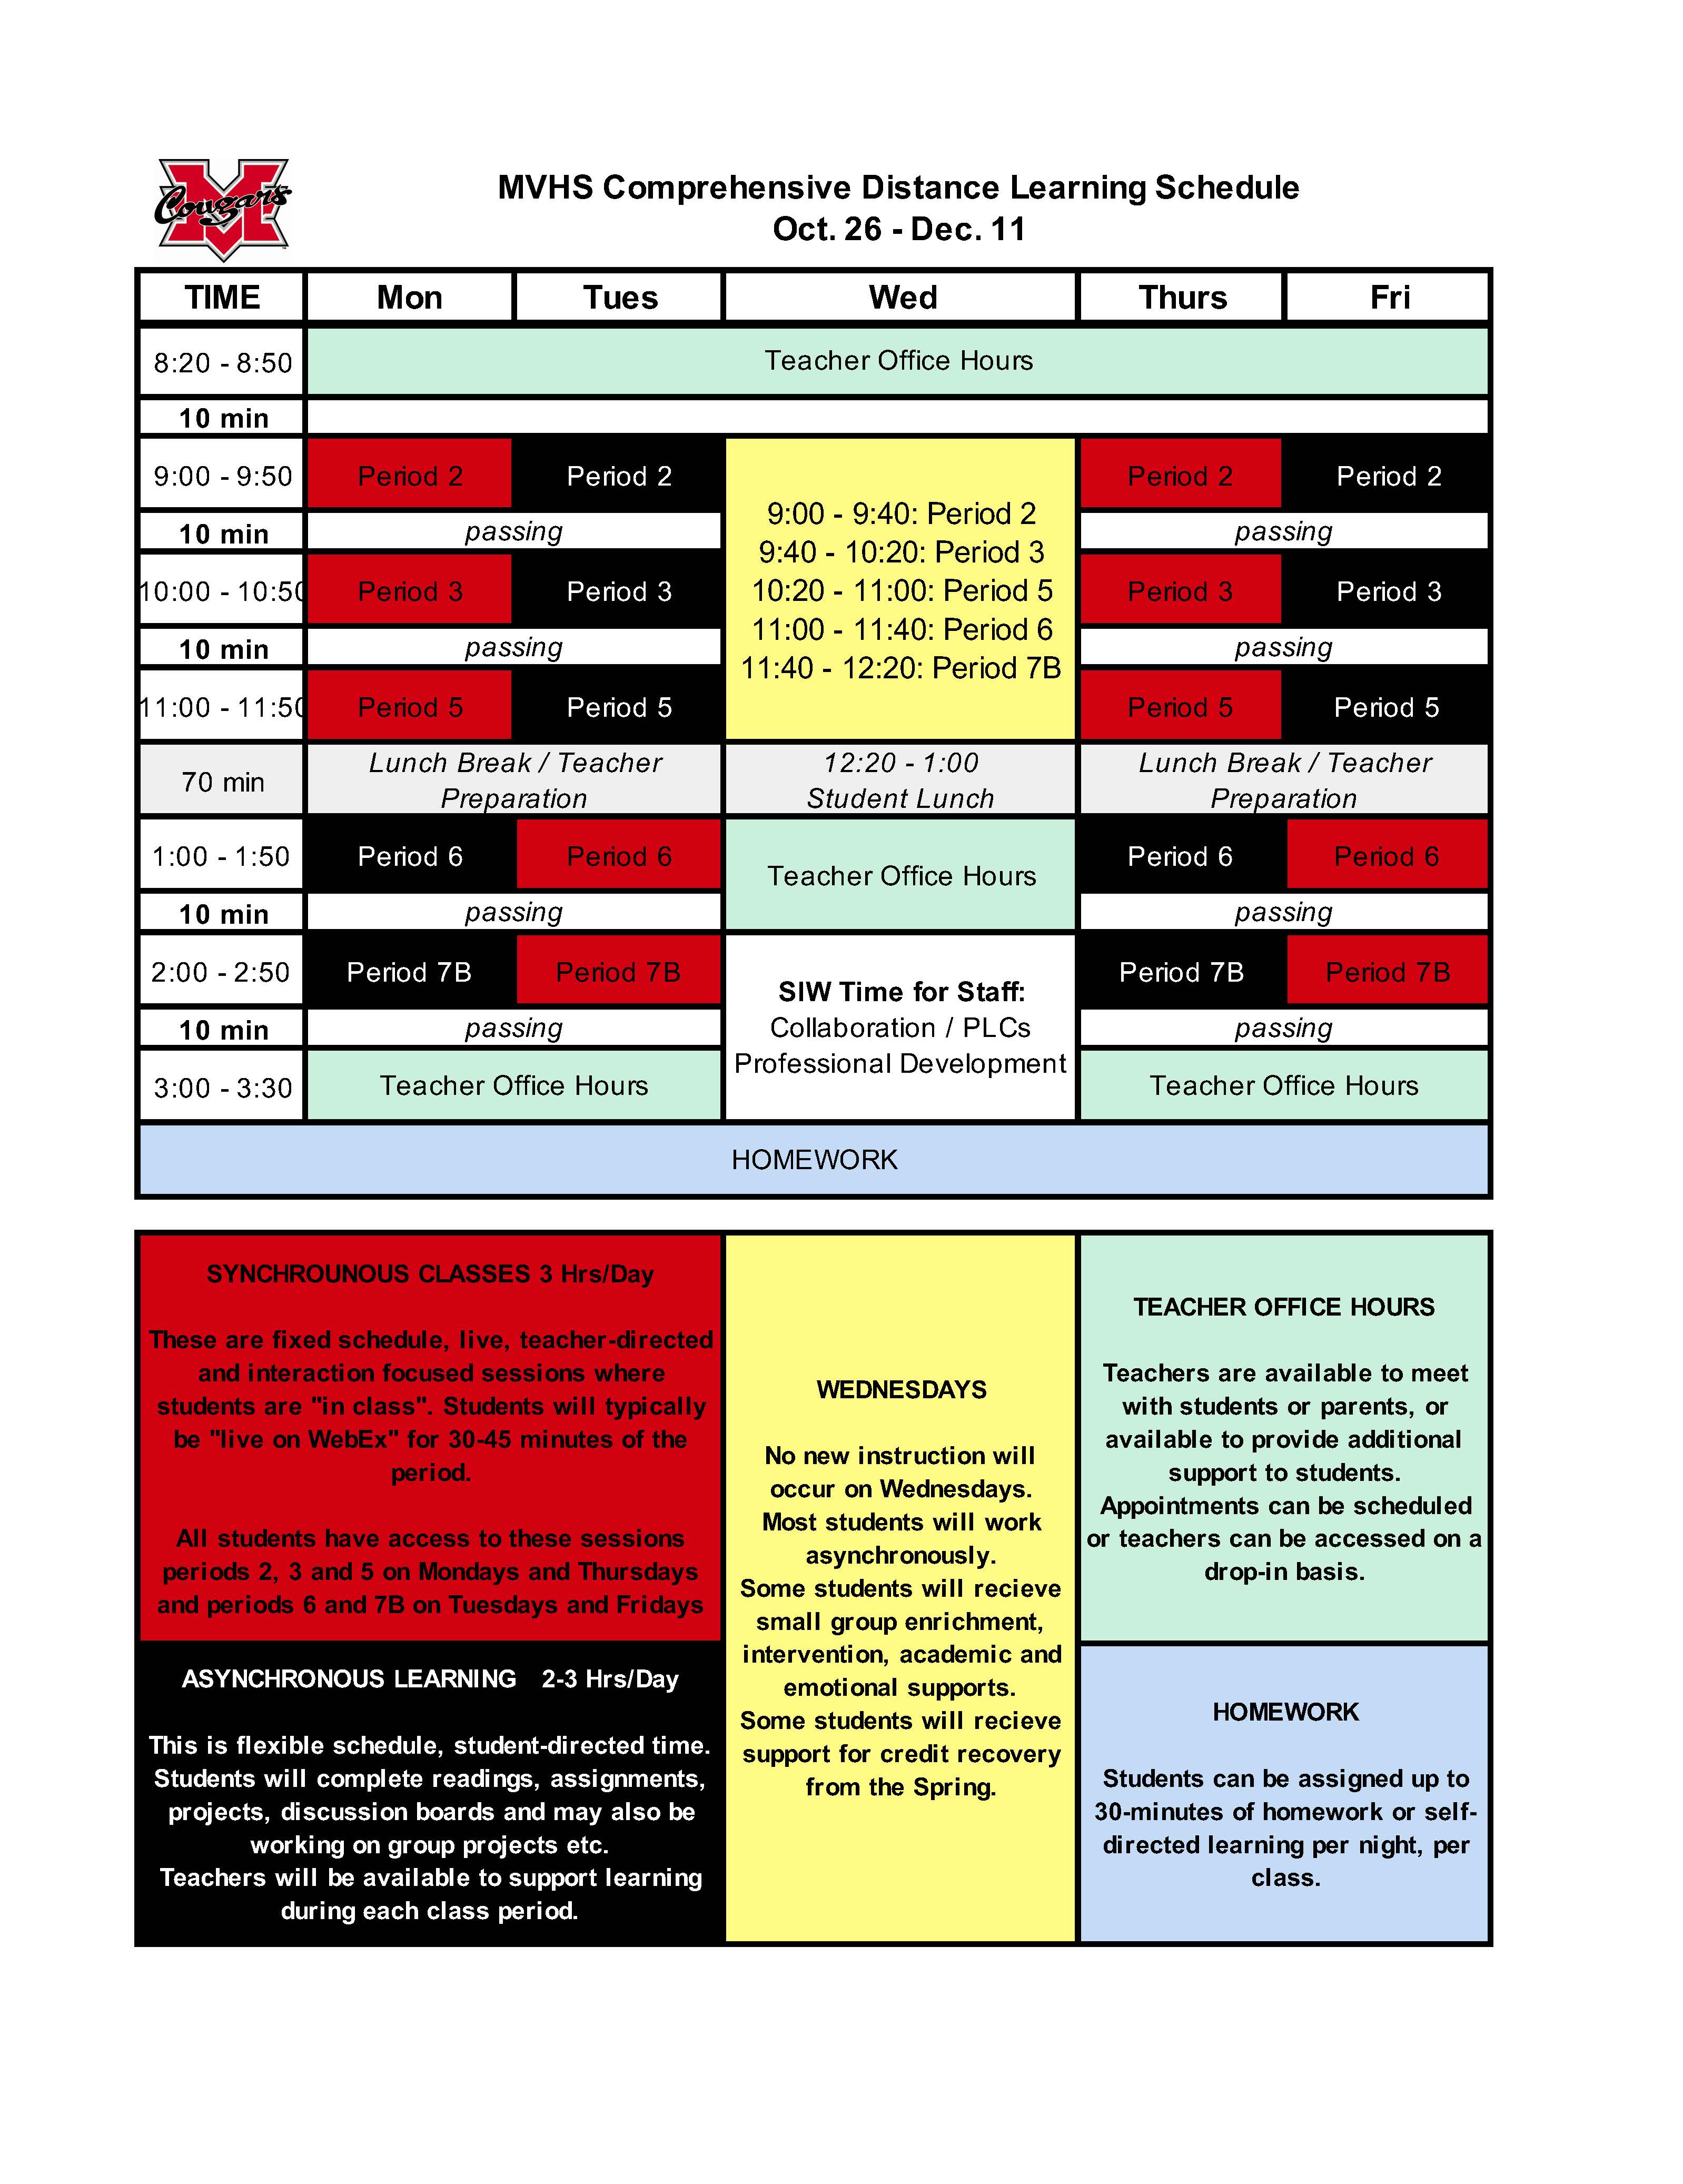 BendLa Pine Schools Our Schedule Has Changed